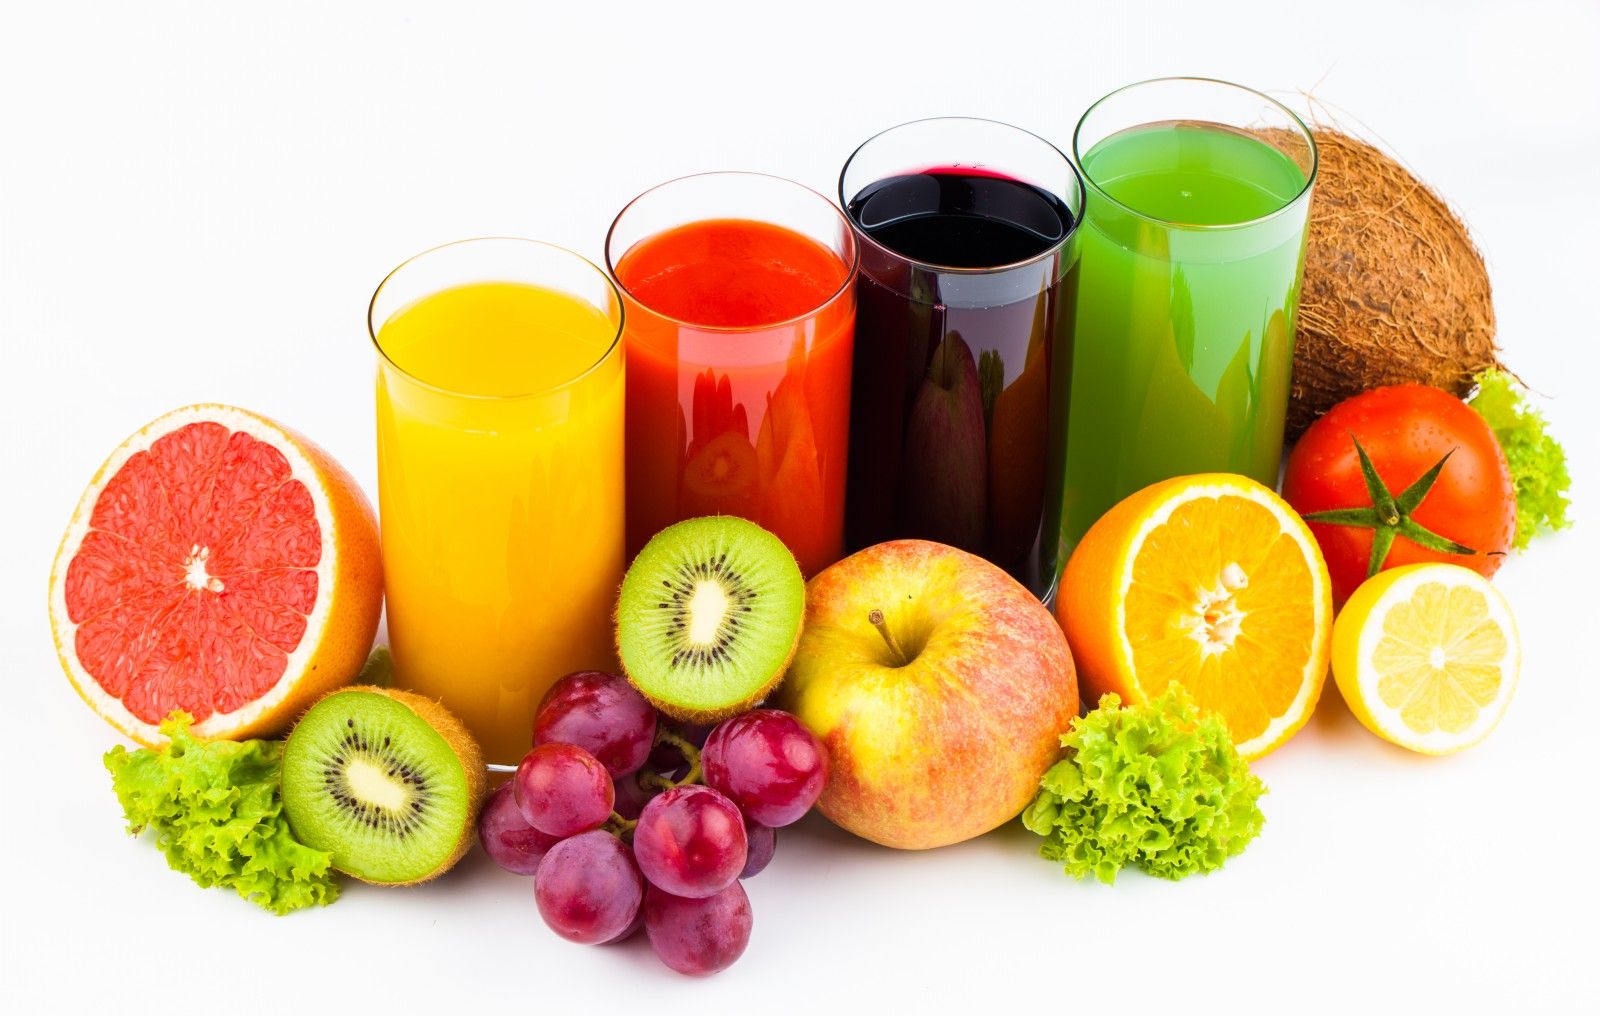 juices-fruits-in-glasses.jpg